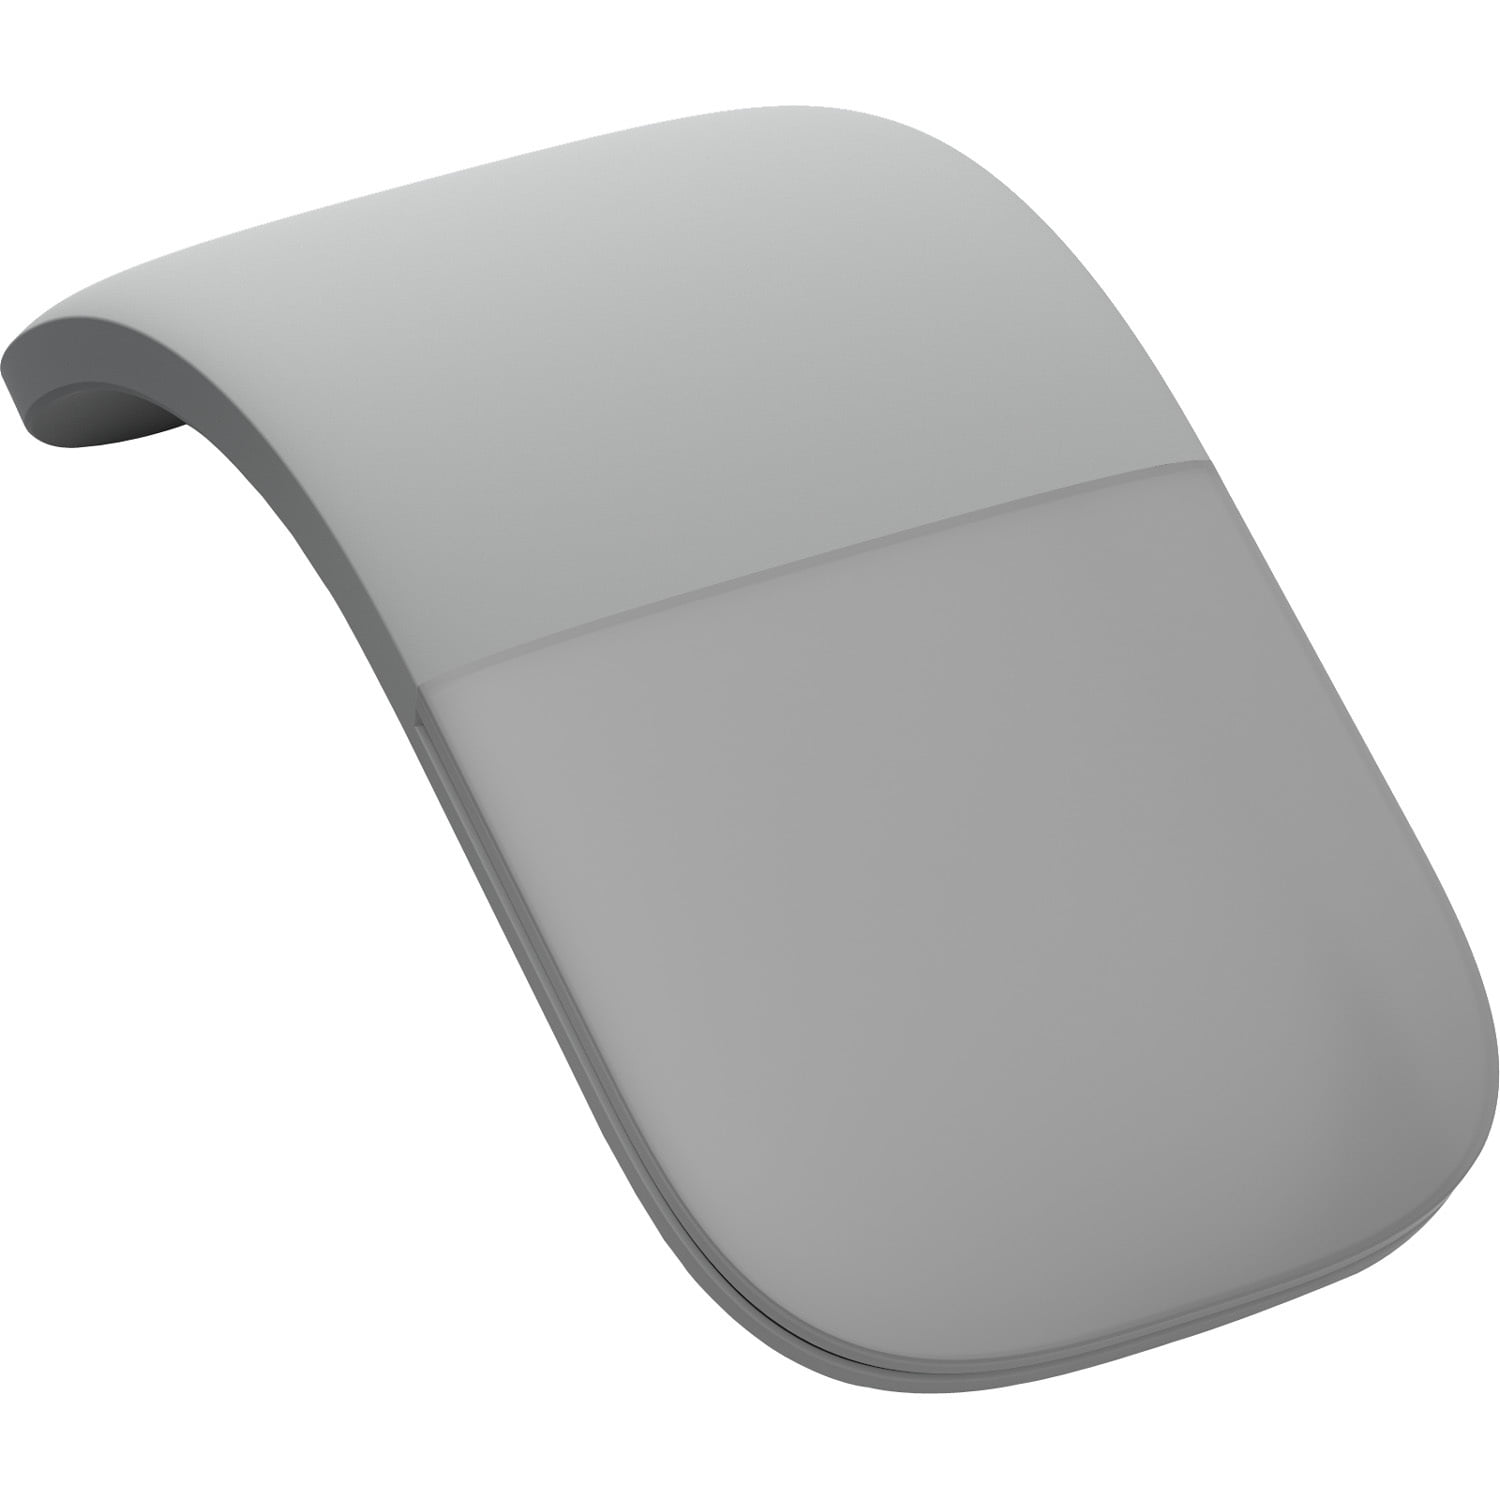 Microsoft Mouse, CZV-00001 Grey, Light Arc Surface